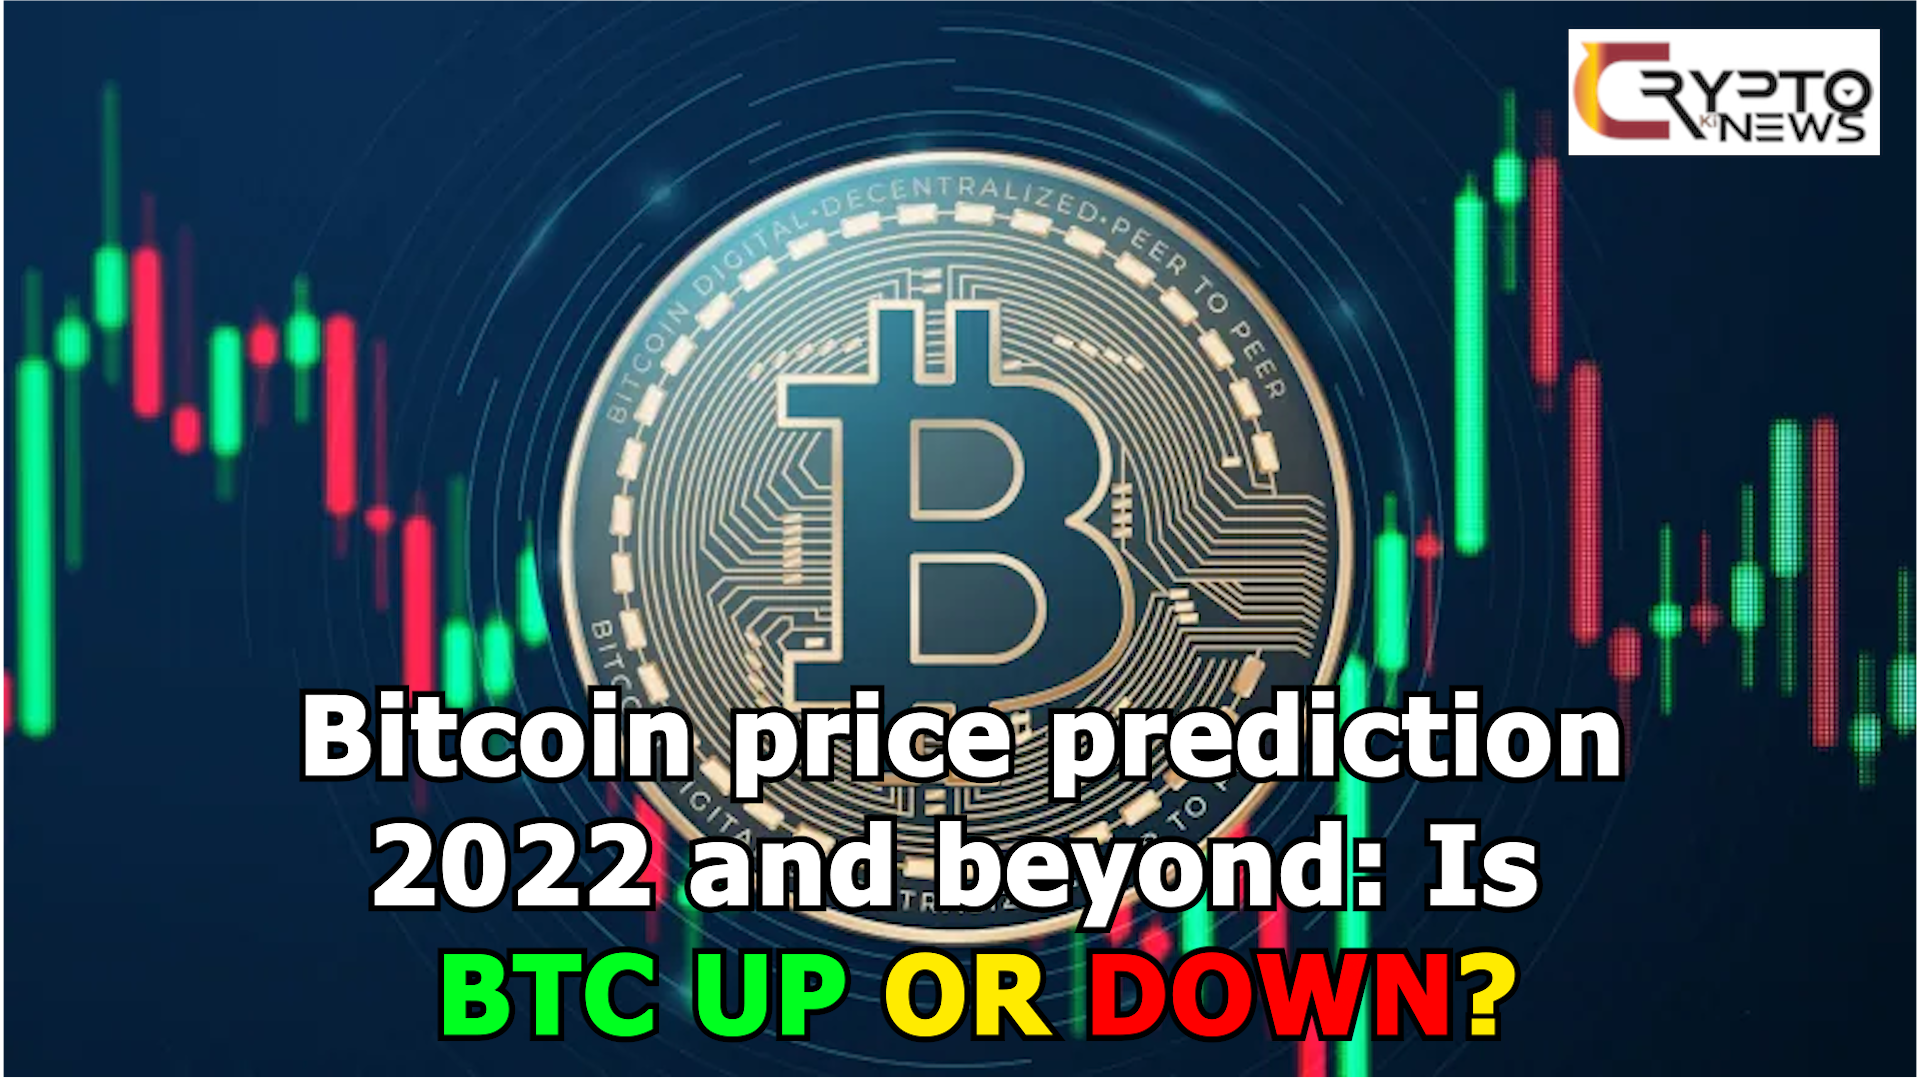 2022 predictions for bitcoin